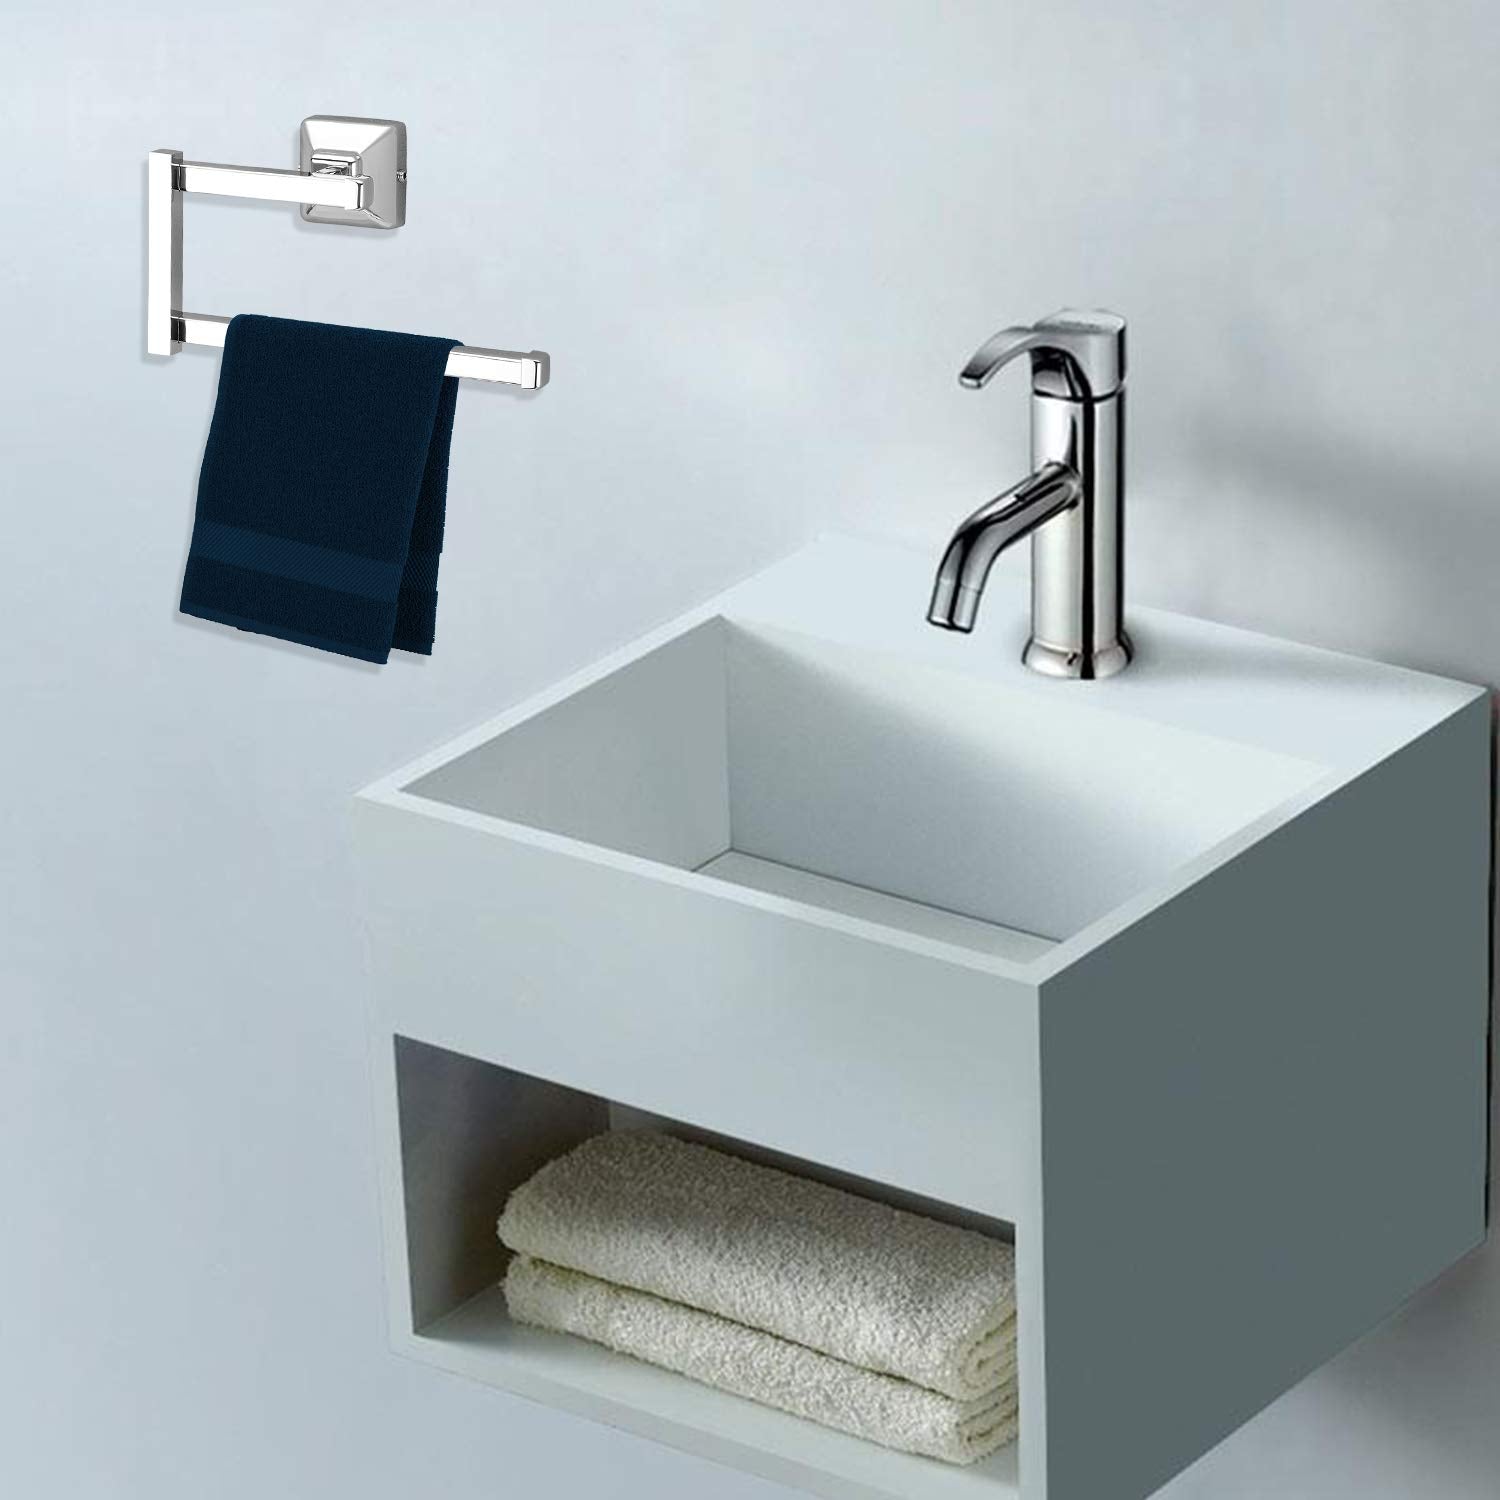 Plantex Stainless Steel 304 Grade Squaro Napkin Ring/Towel Ring /Napkin Holder/Towel Hanger/Bathroom Accessories(Chrome) - Pack of 4